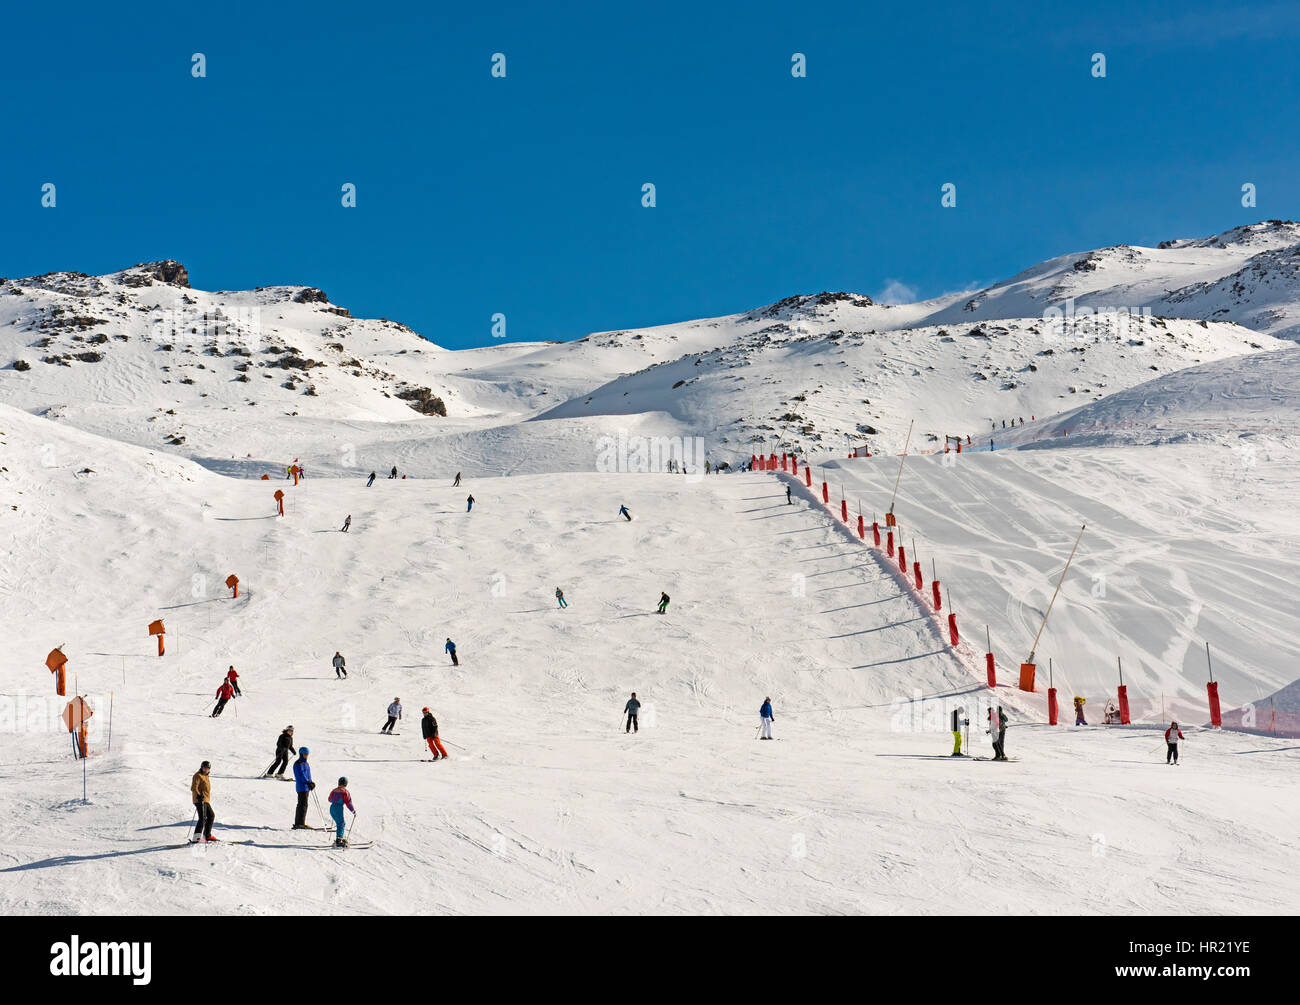 Skiers on a ski slope piste in winter alpine mountain resort Stock Photo